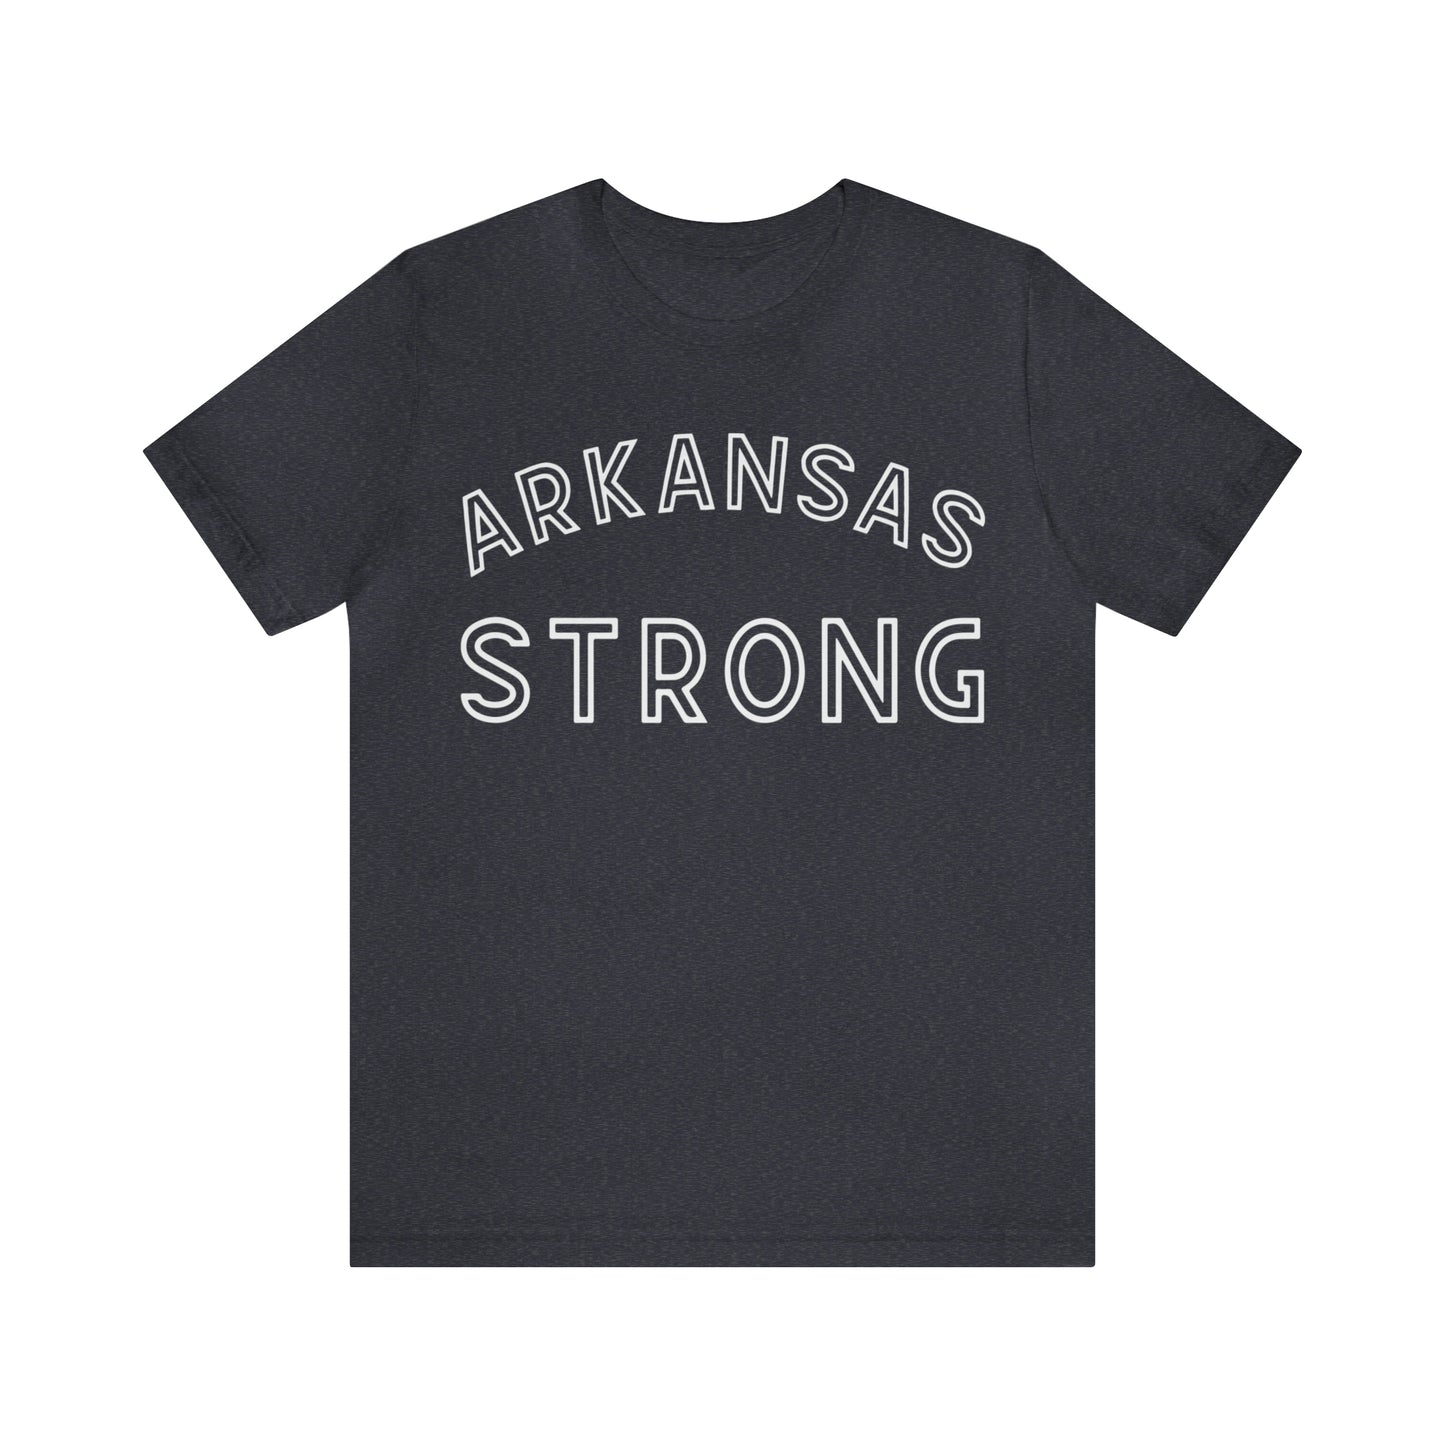 Arkansas Strong Tee